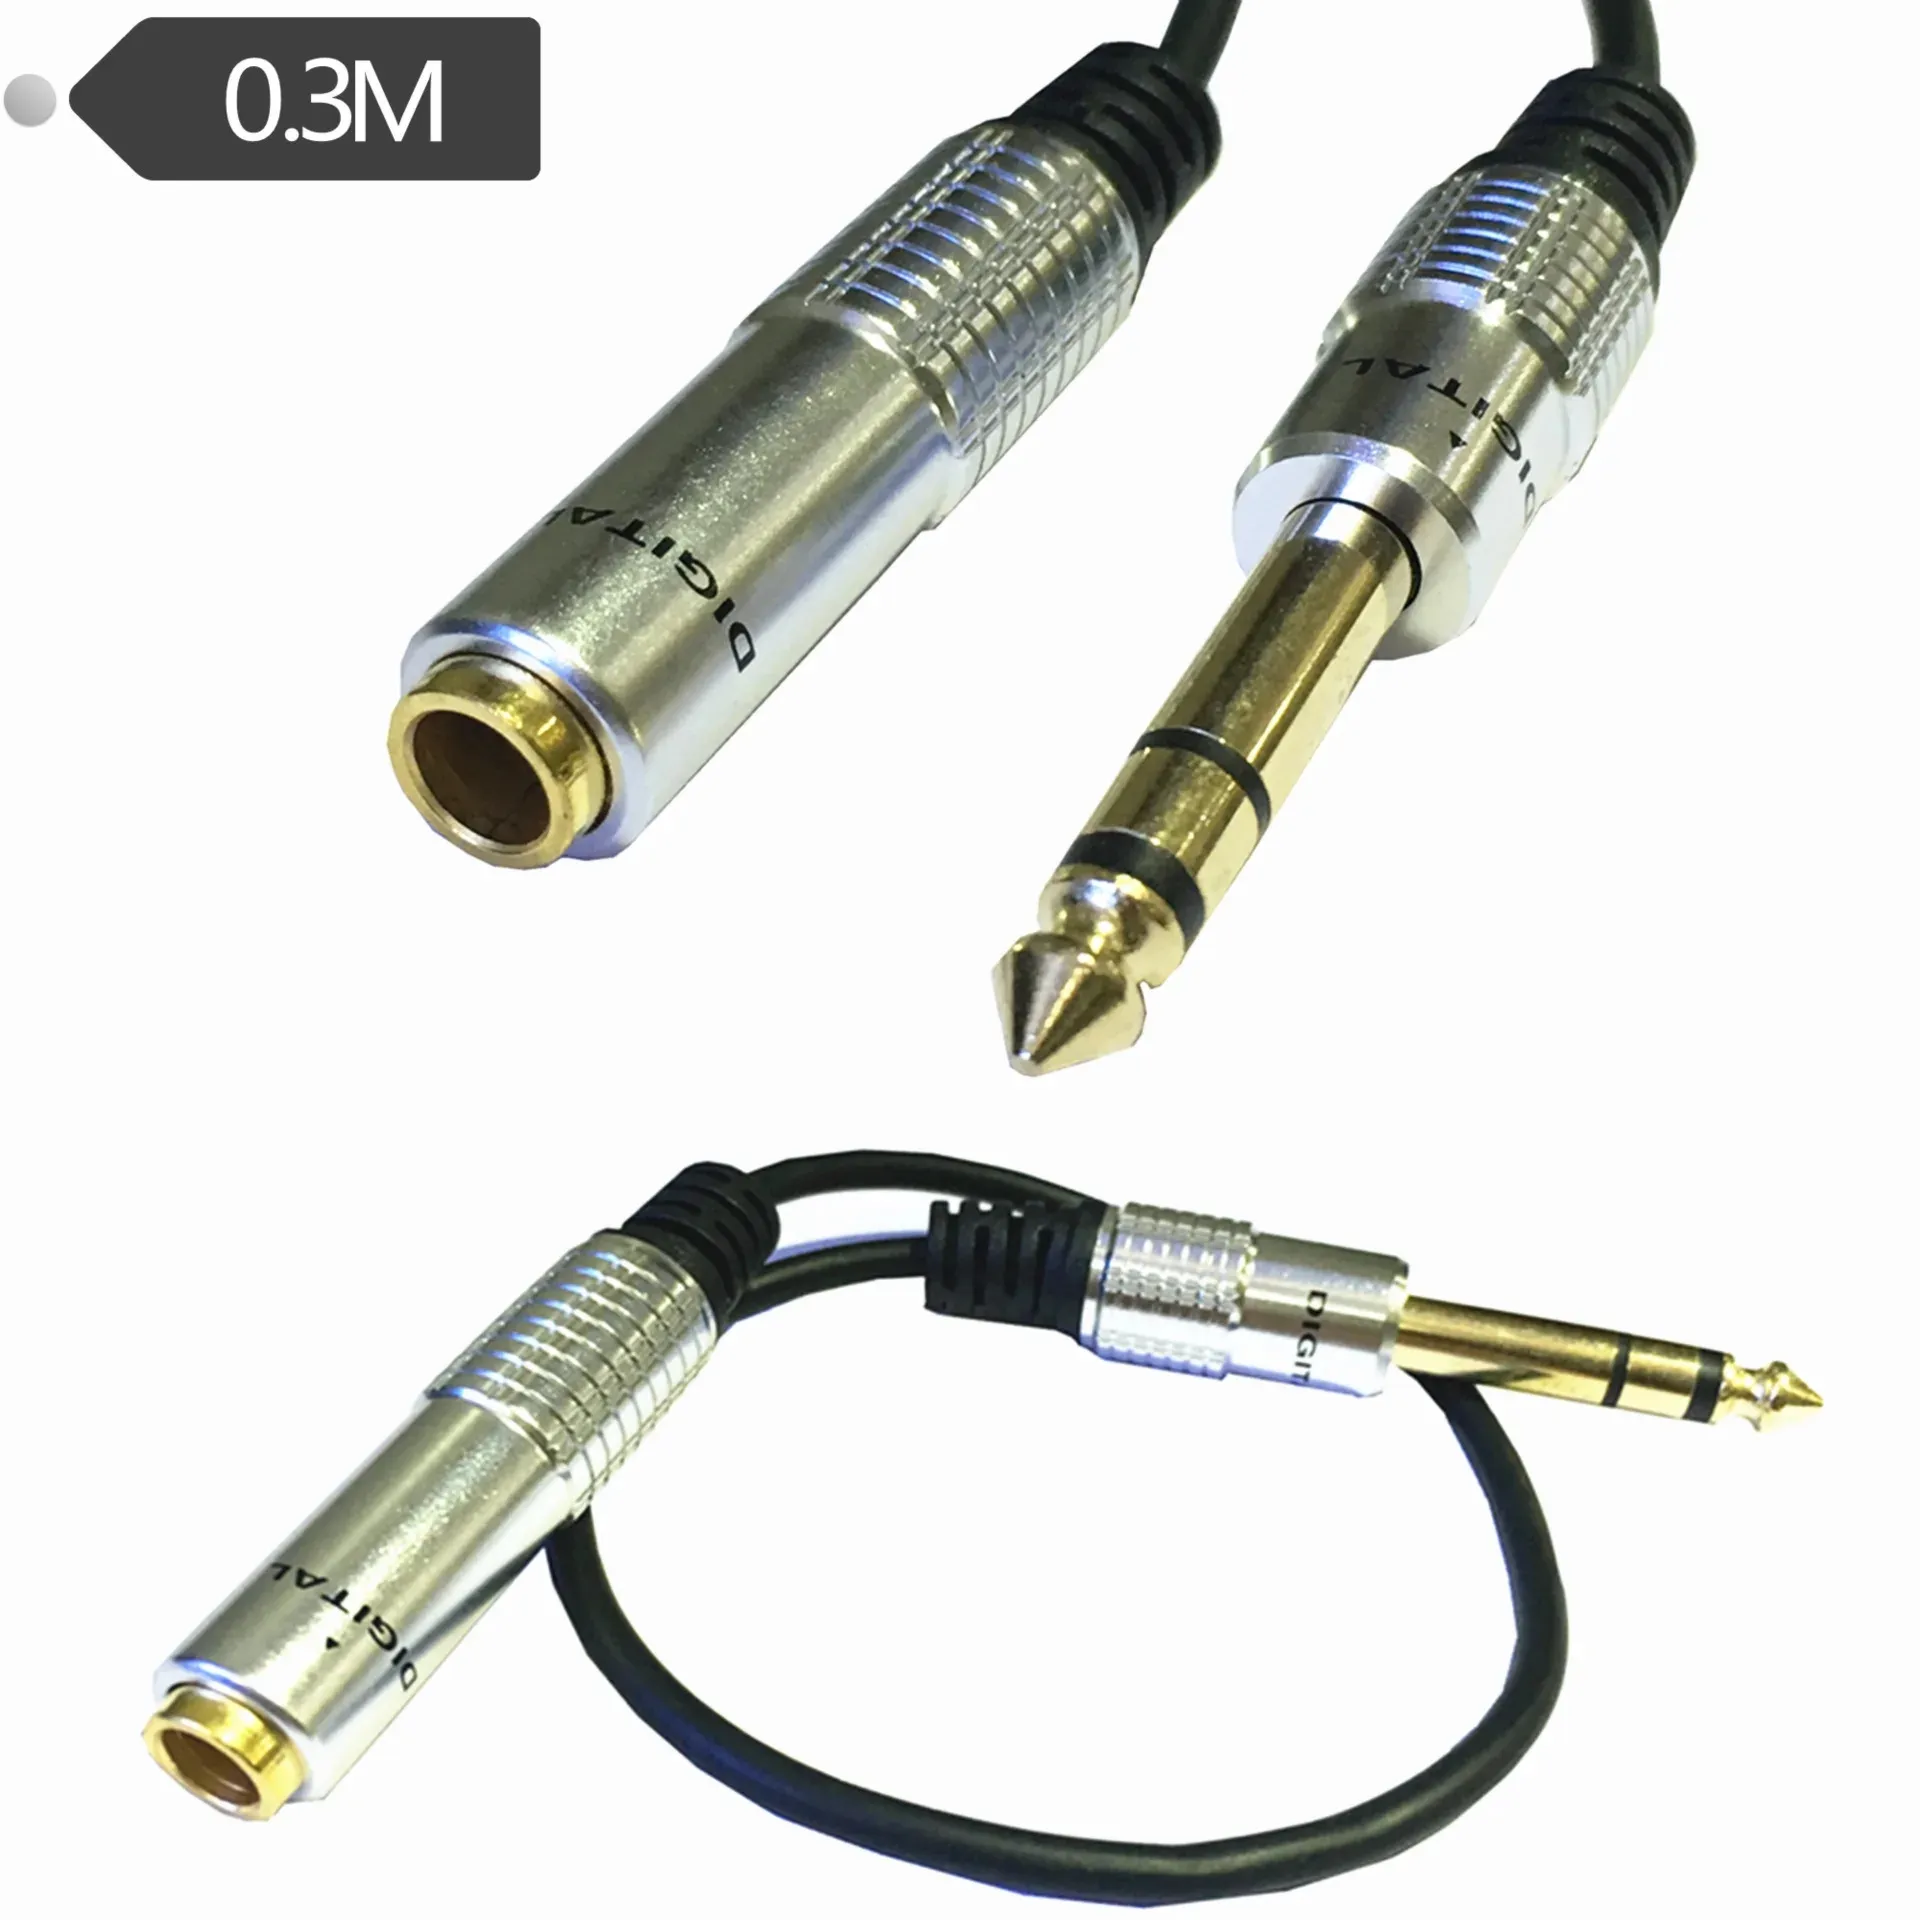 Enchufe de 6,35mm a enchufe de 3,5mm Cable de extensión de auriculares caja de Metal estéreo 6,35 revolución 3,5 Cable adaptador de Audio hembra 30cm 1,8 m